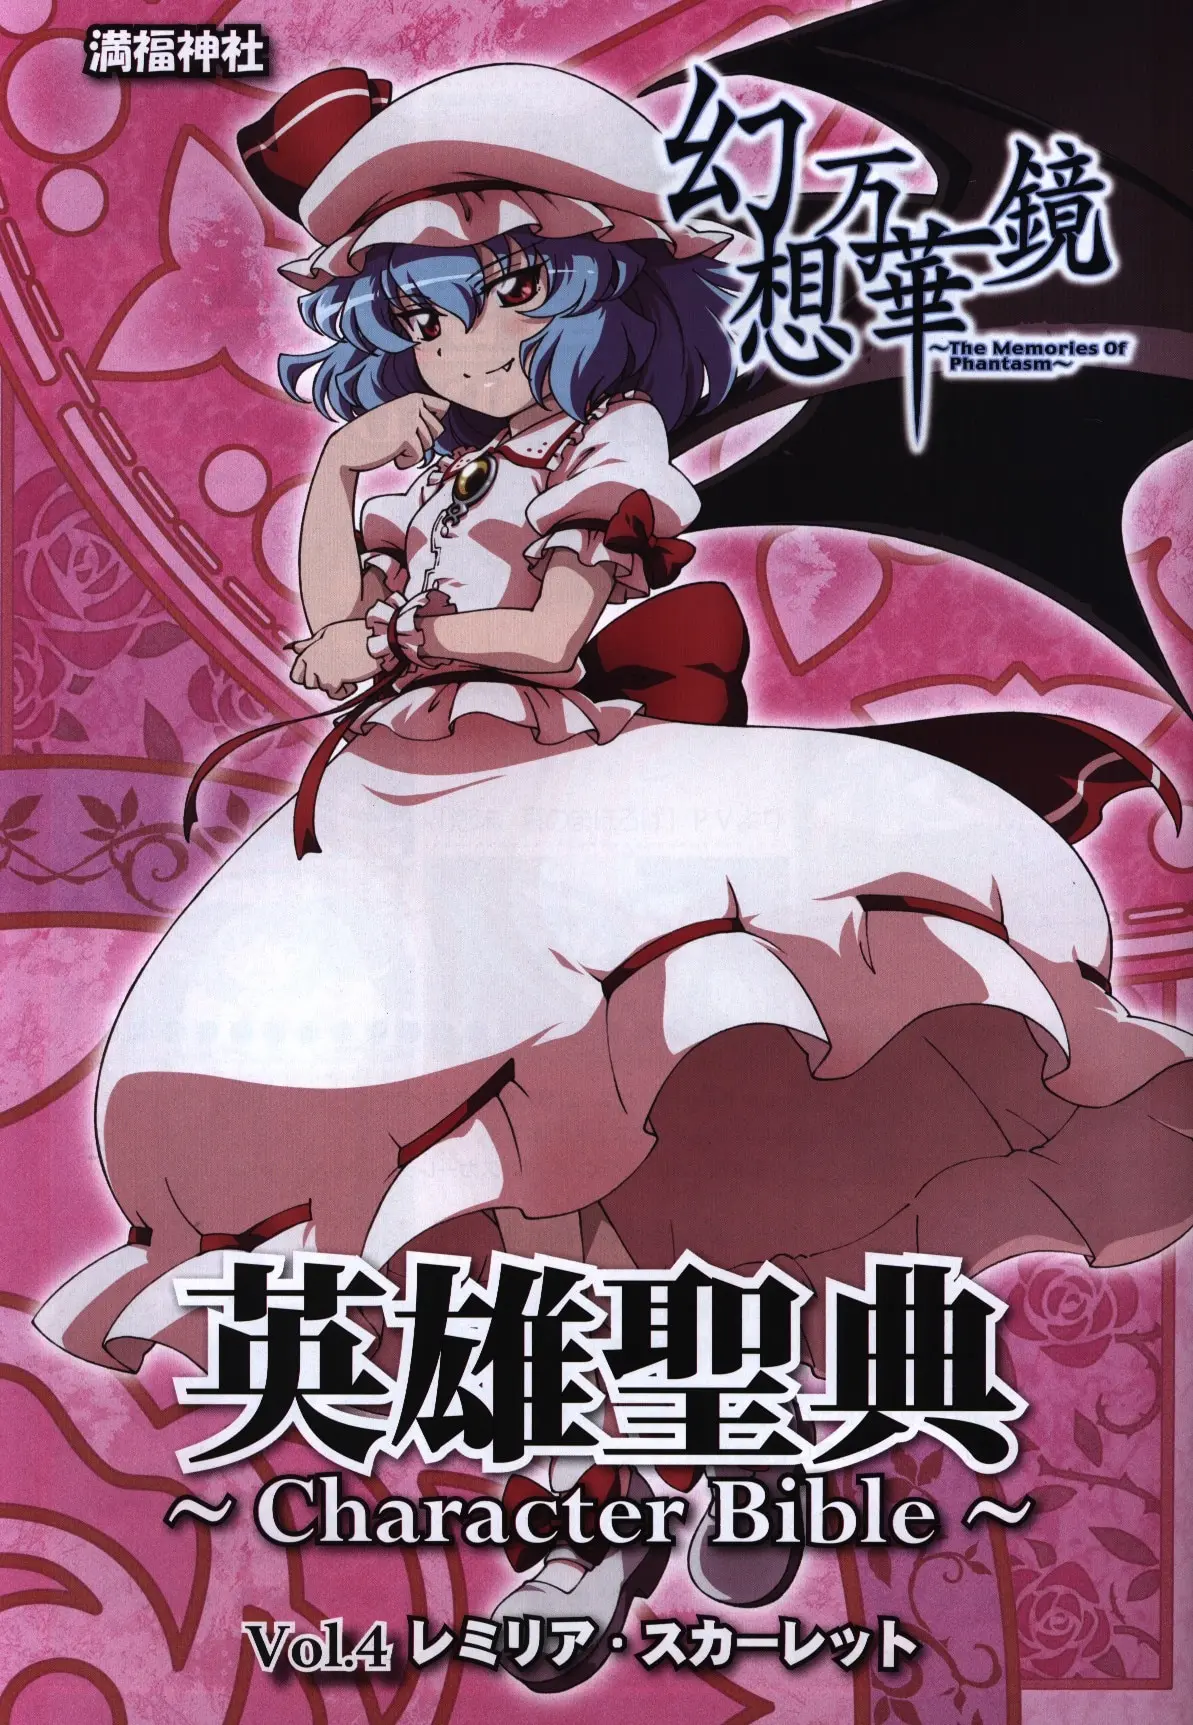 Doujinshi - Touhou Project / Remilia Scarlet (幻想万華鏡 英雄聖典-Character Bible-Vol.4 レミリア・スカーレット) / Manpuku Jinja